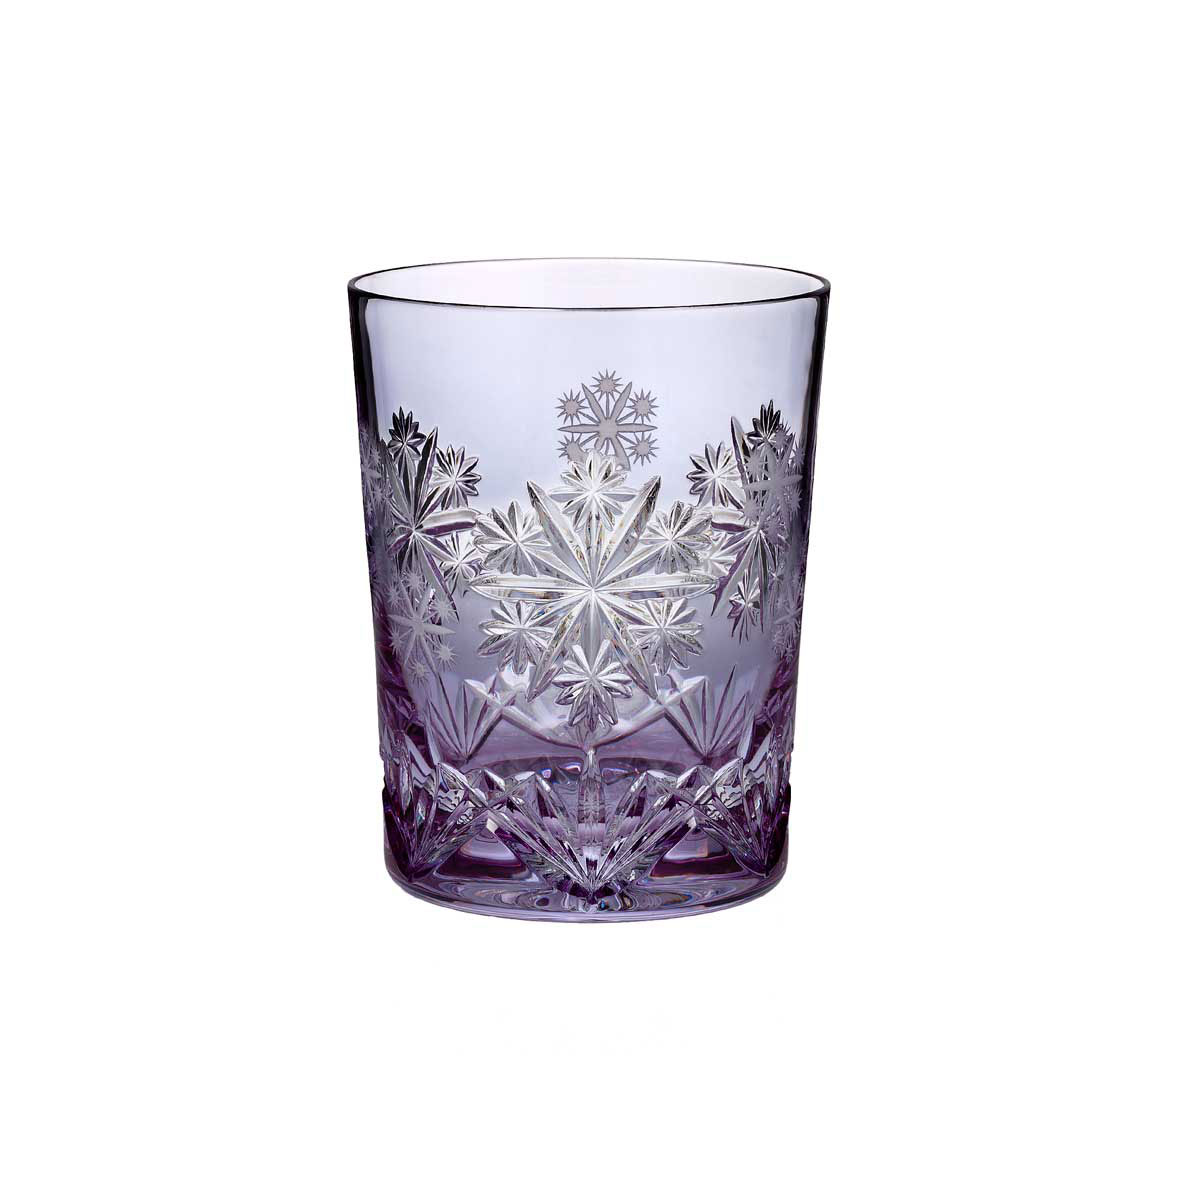 Waterford Crystal, Snowflake Wishes Serenity Lavender DOF Tumbler, Single